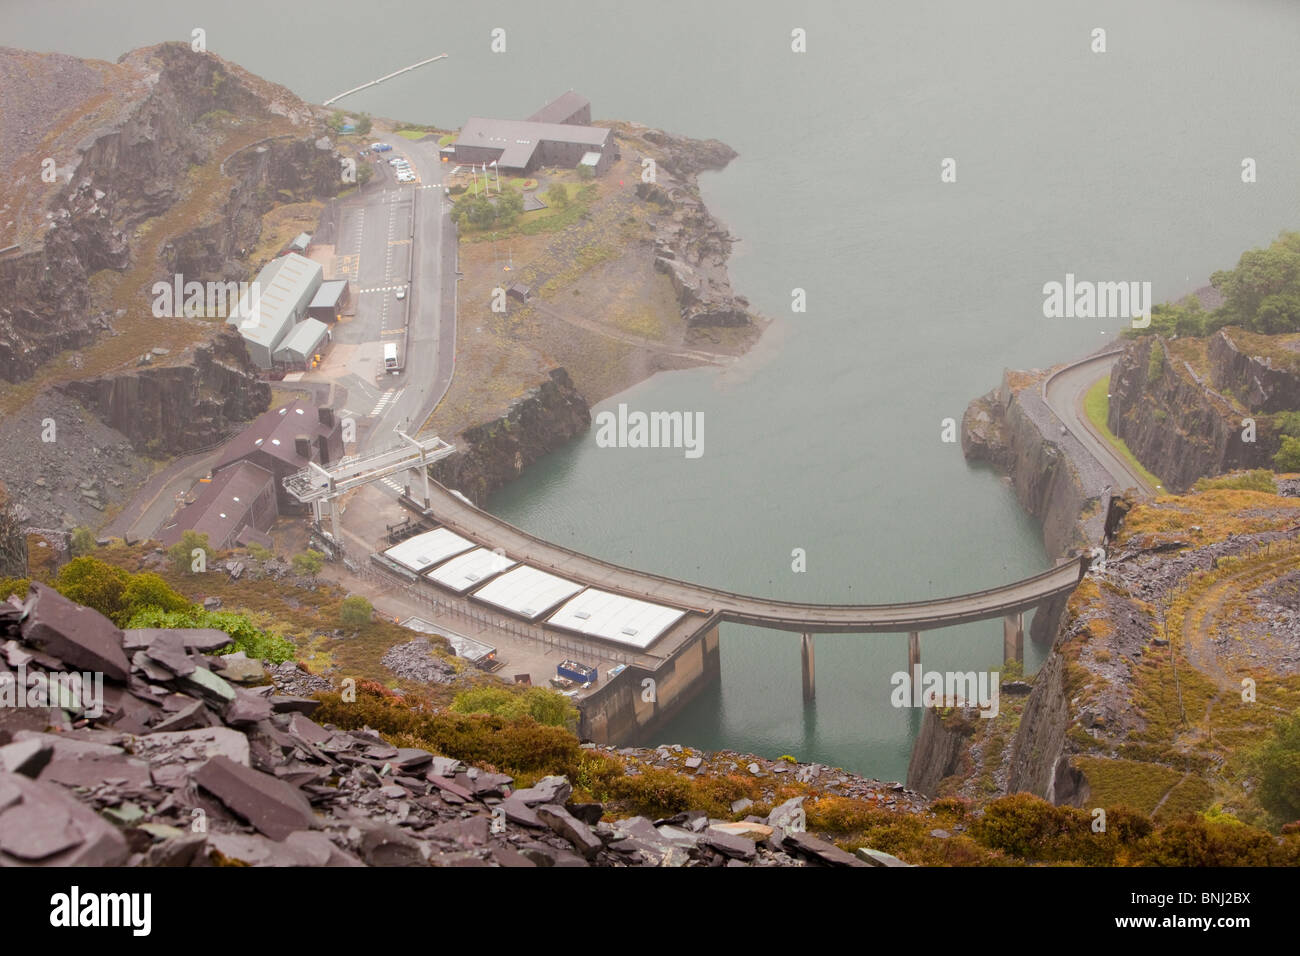 Dinorwig Wasserkraftwerk in Llanberis, Snowdonia, Nord-Wales. Stockfoto